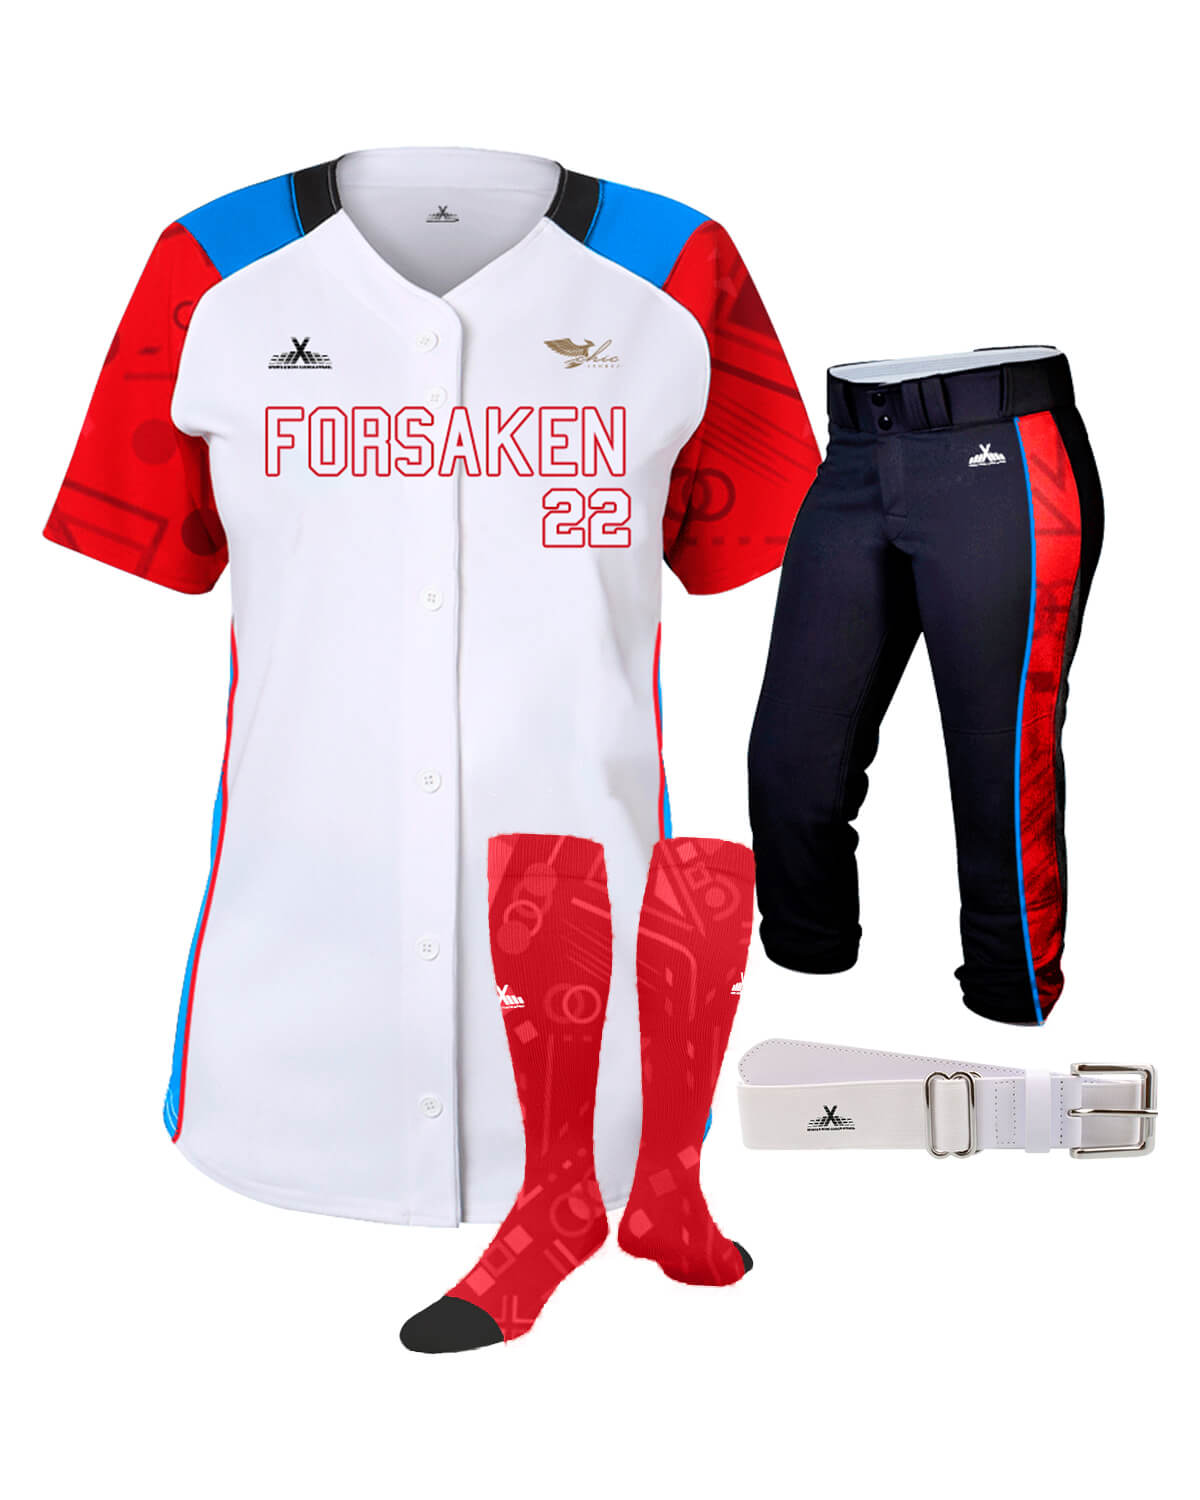 AthleisureX Full Custom Softball Uniform - For Women